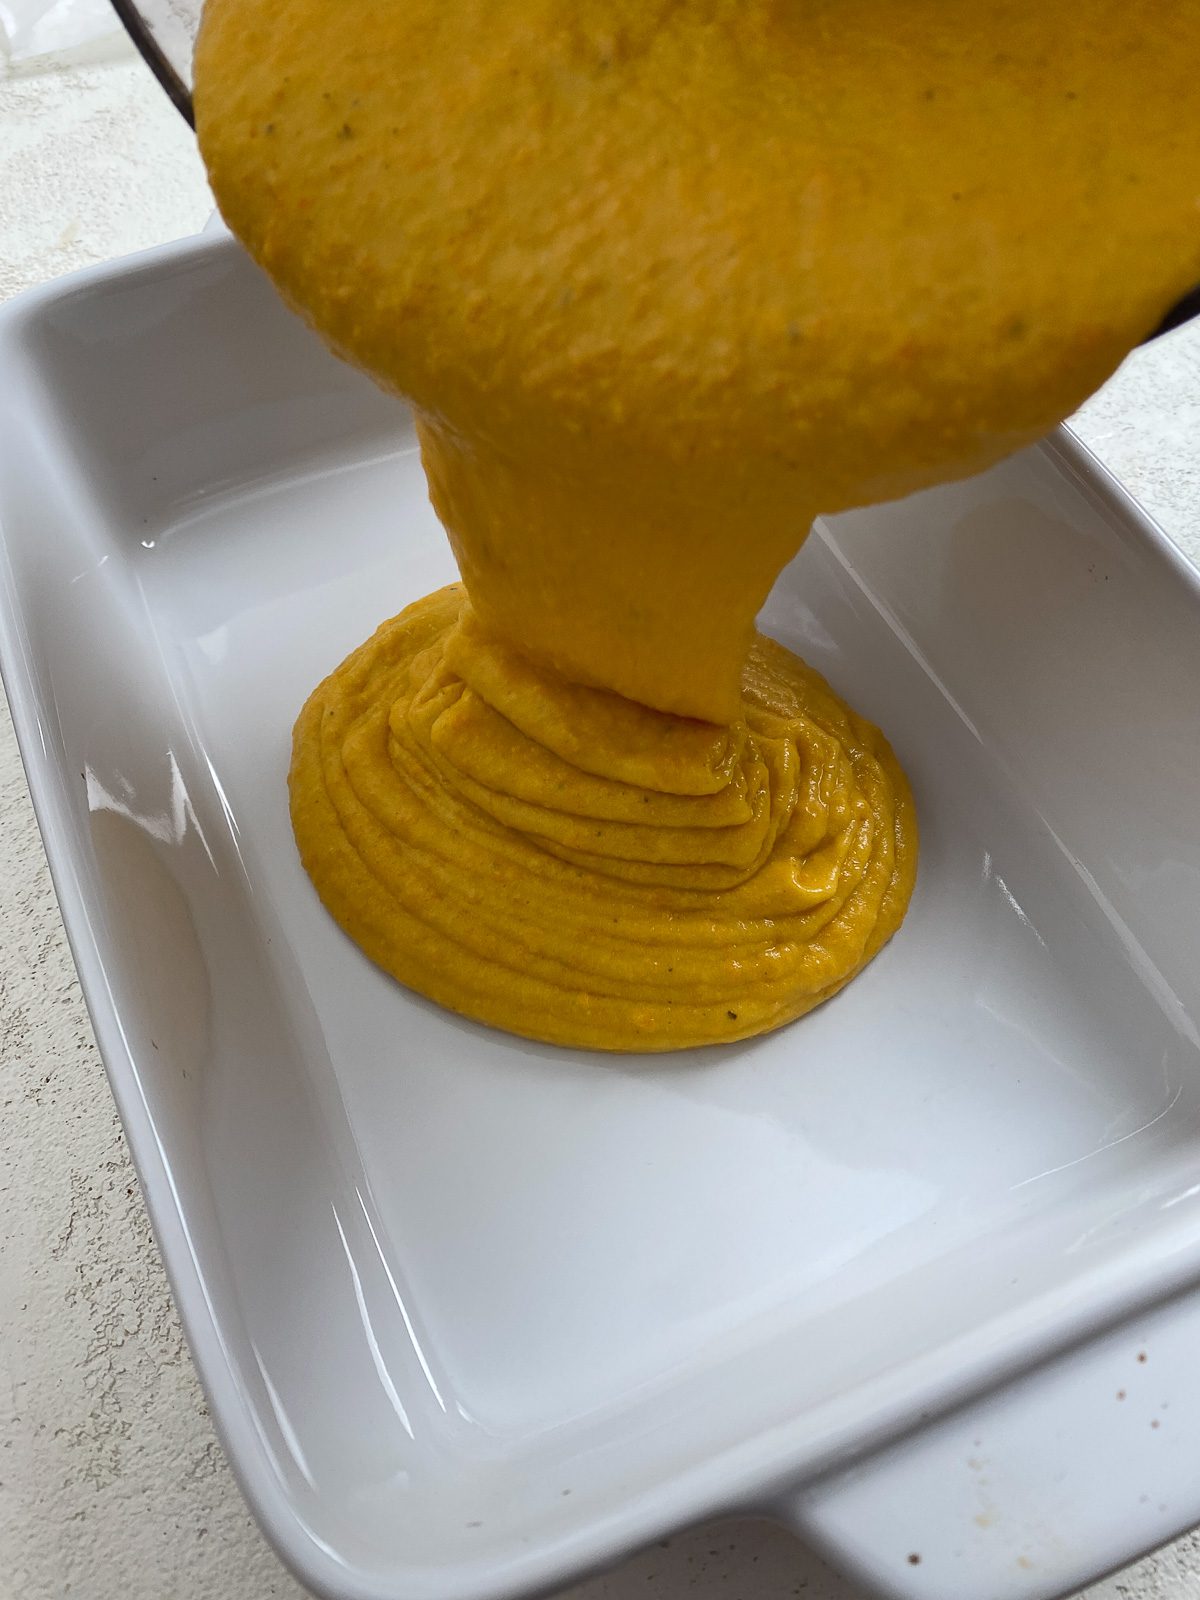 process shot showing vegan cheese being poured into baking dish